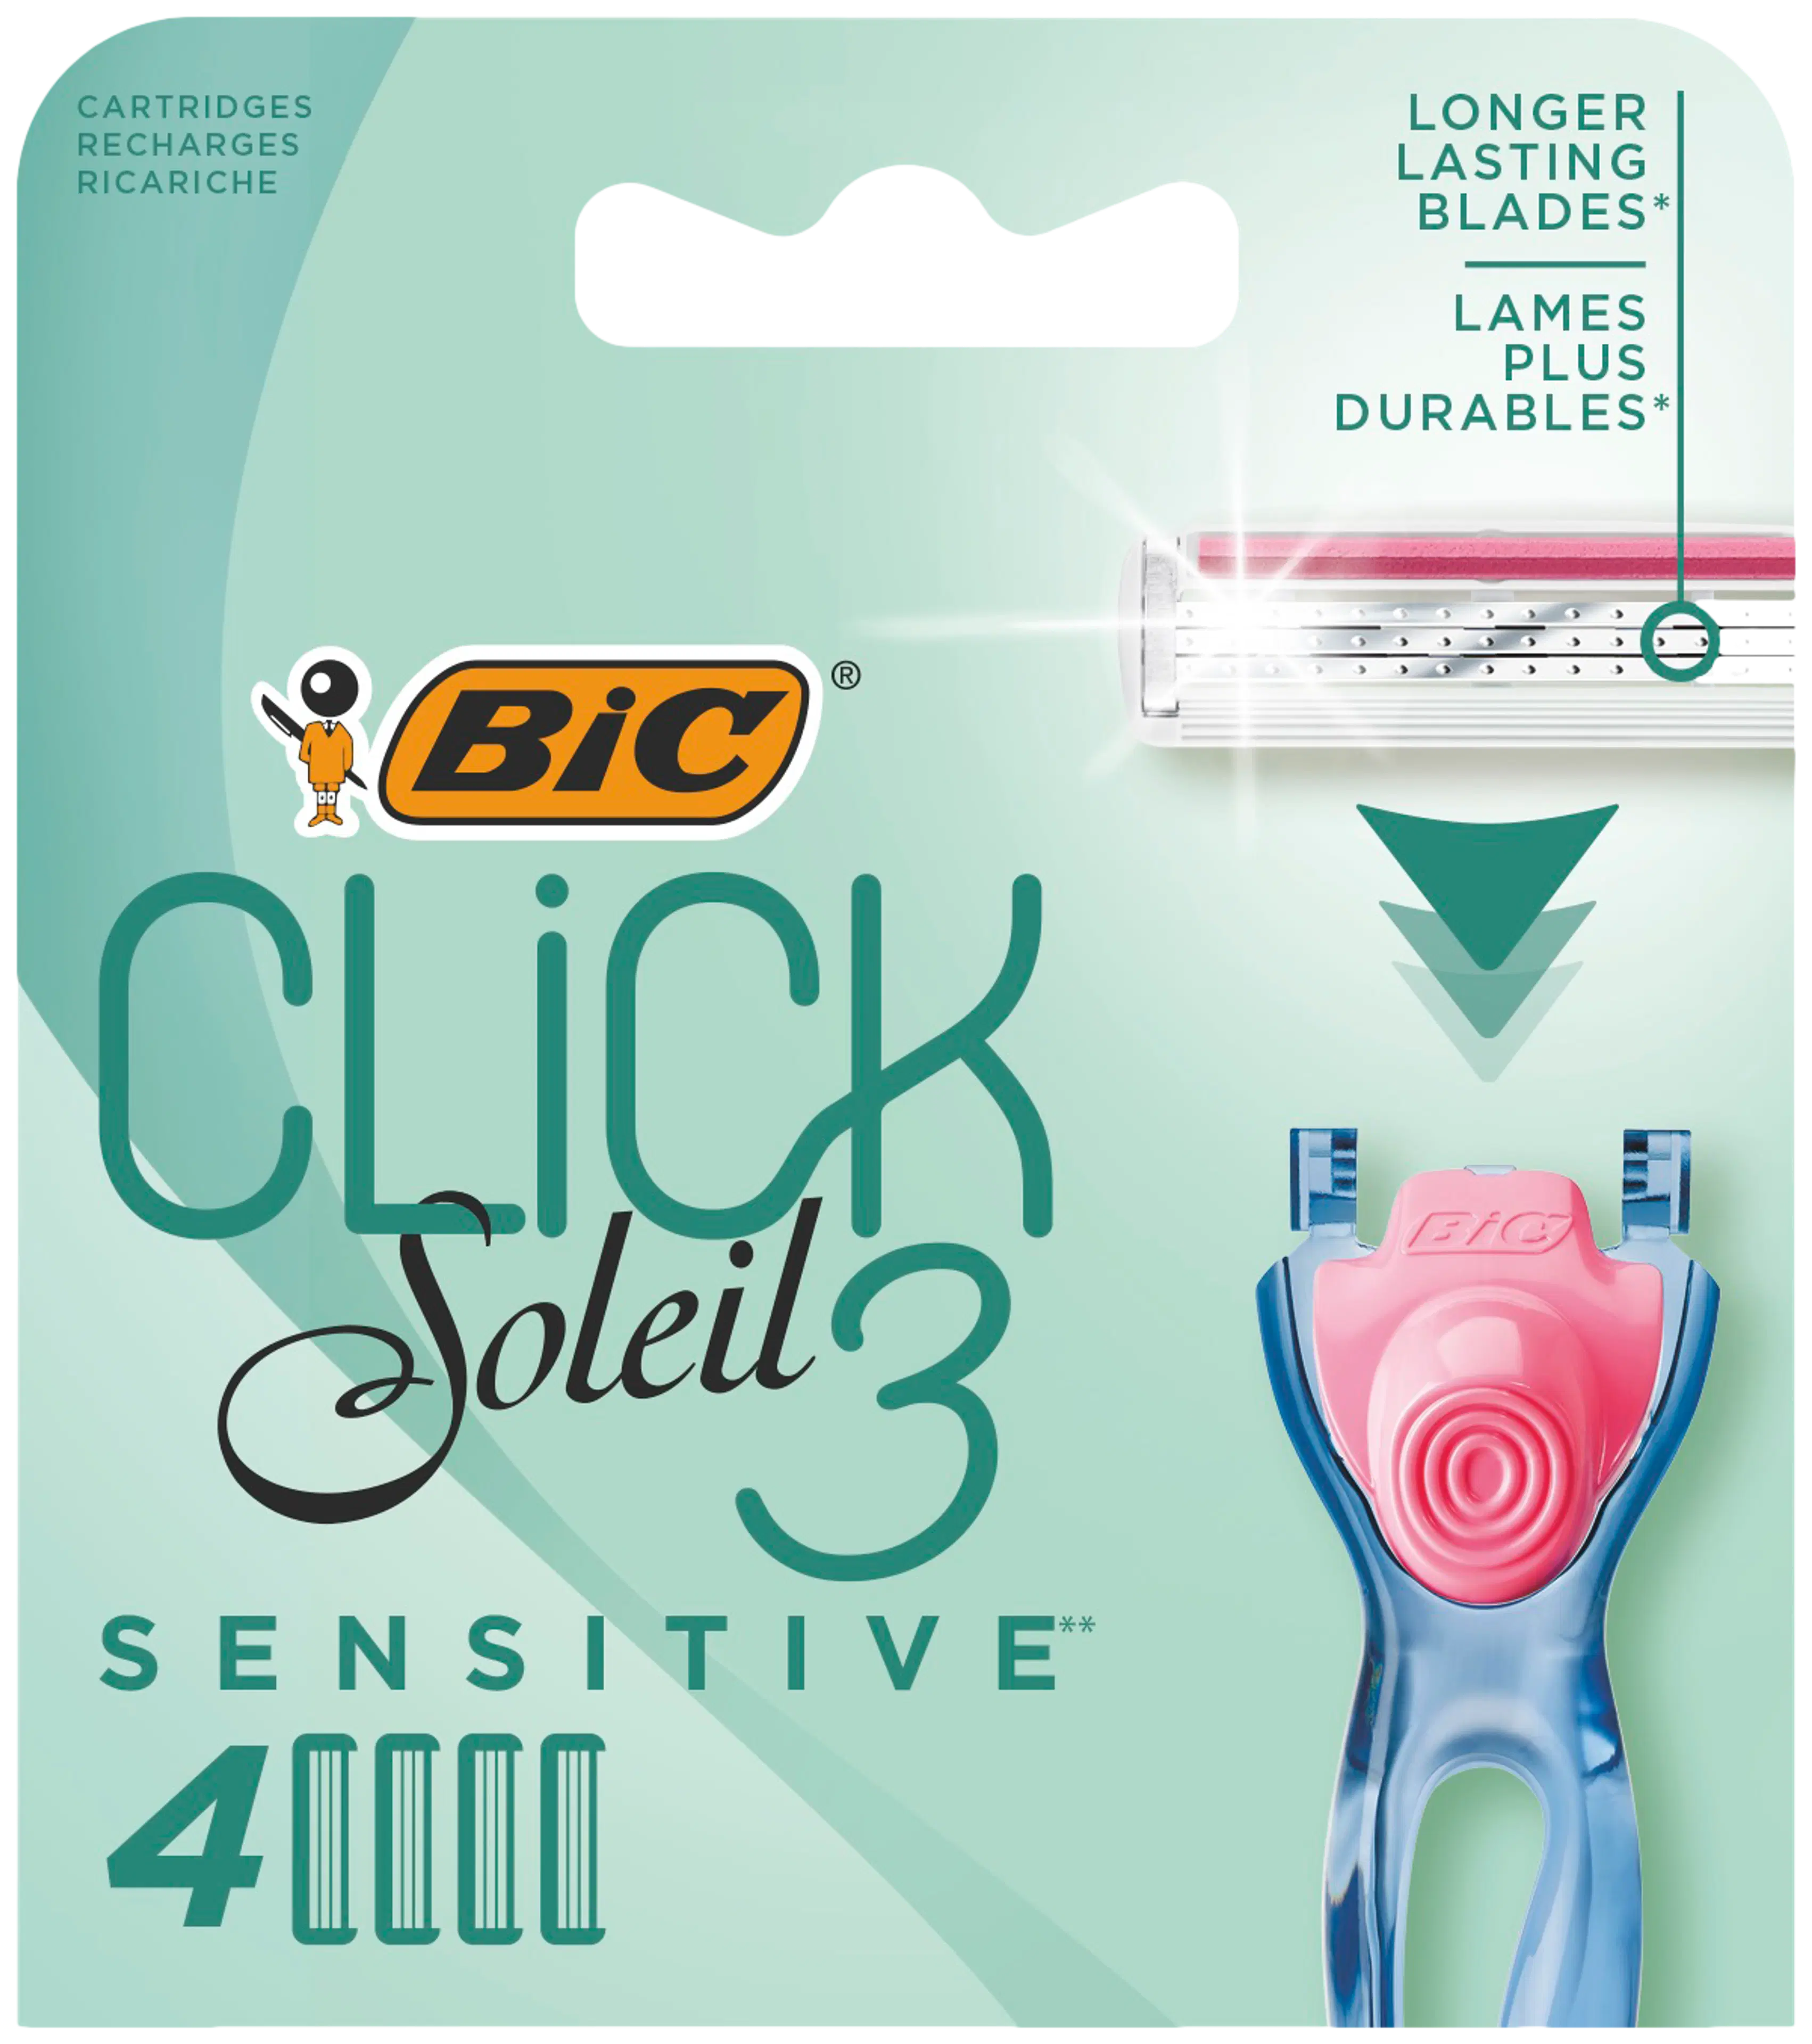 BIC Click Soleil 3 Sensitive varaterä 4-pack